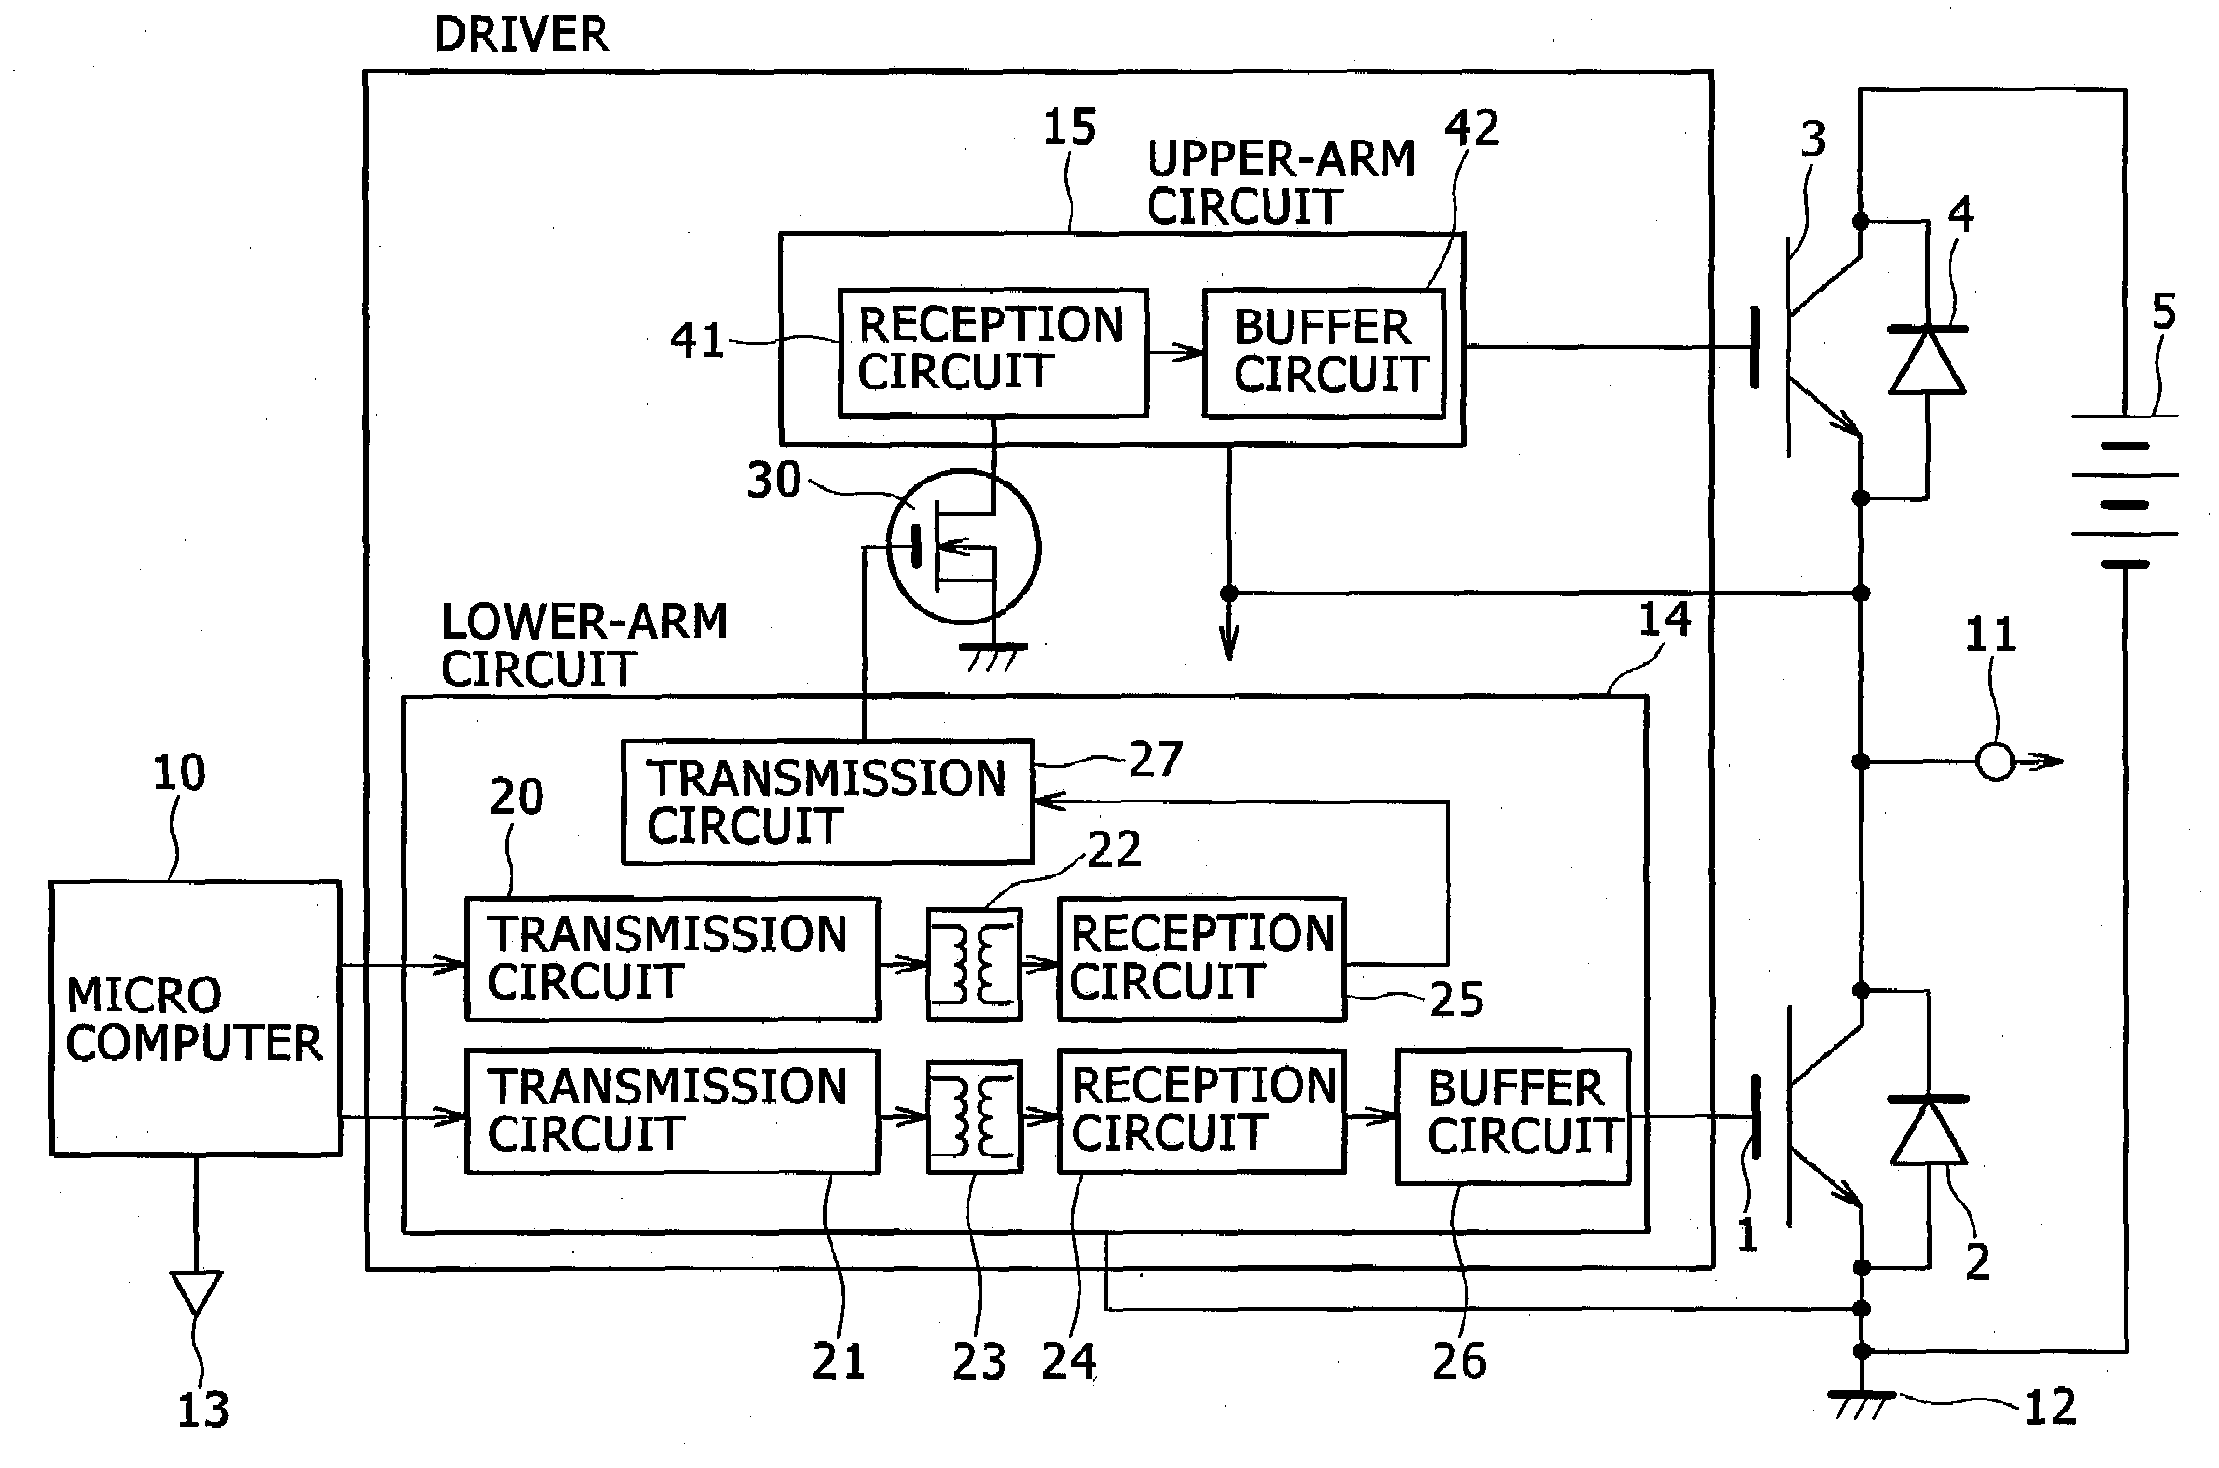 Electric Power Conversion Apparatus